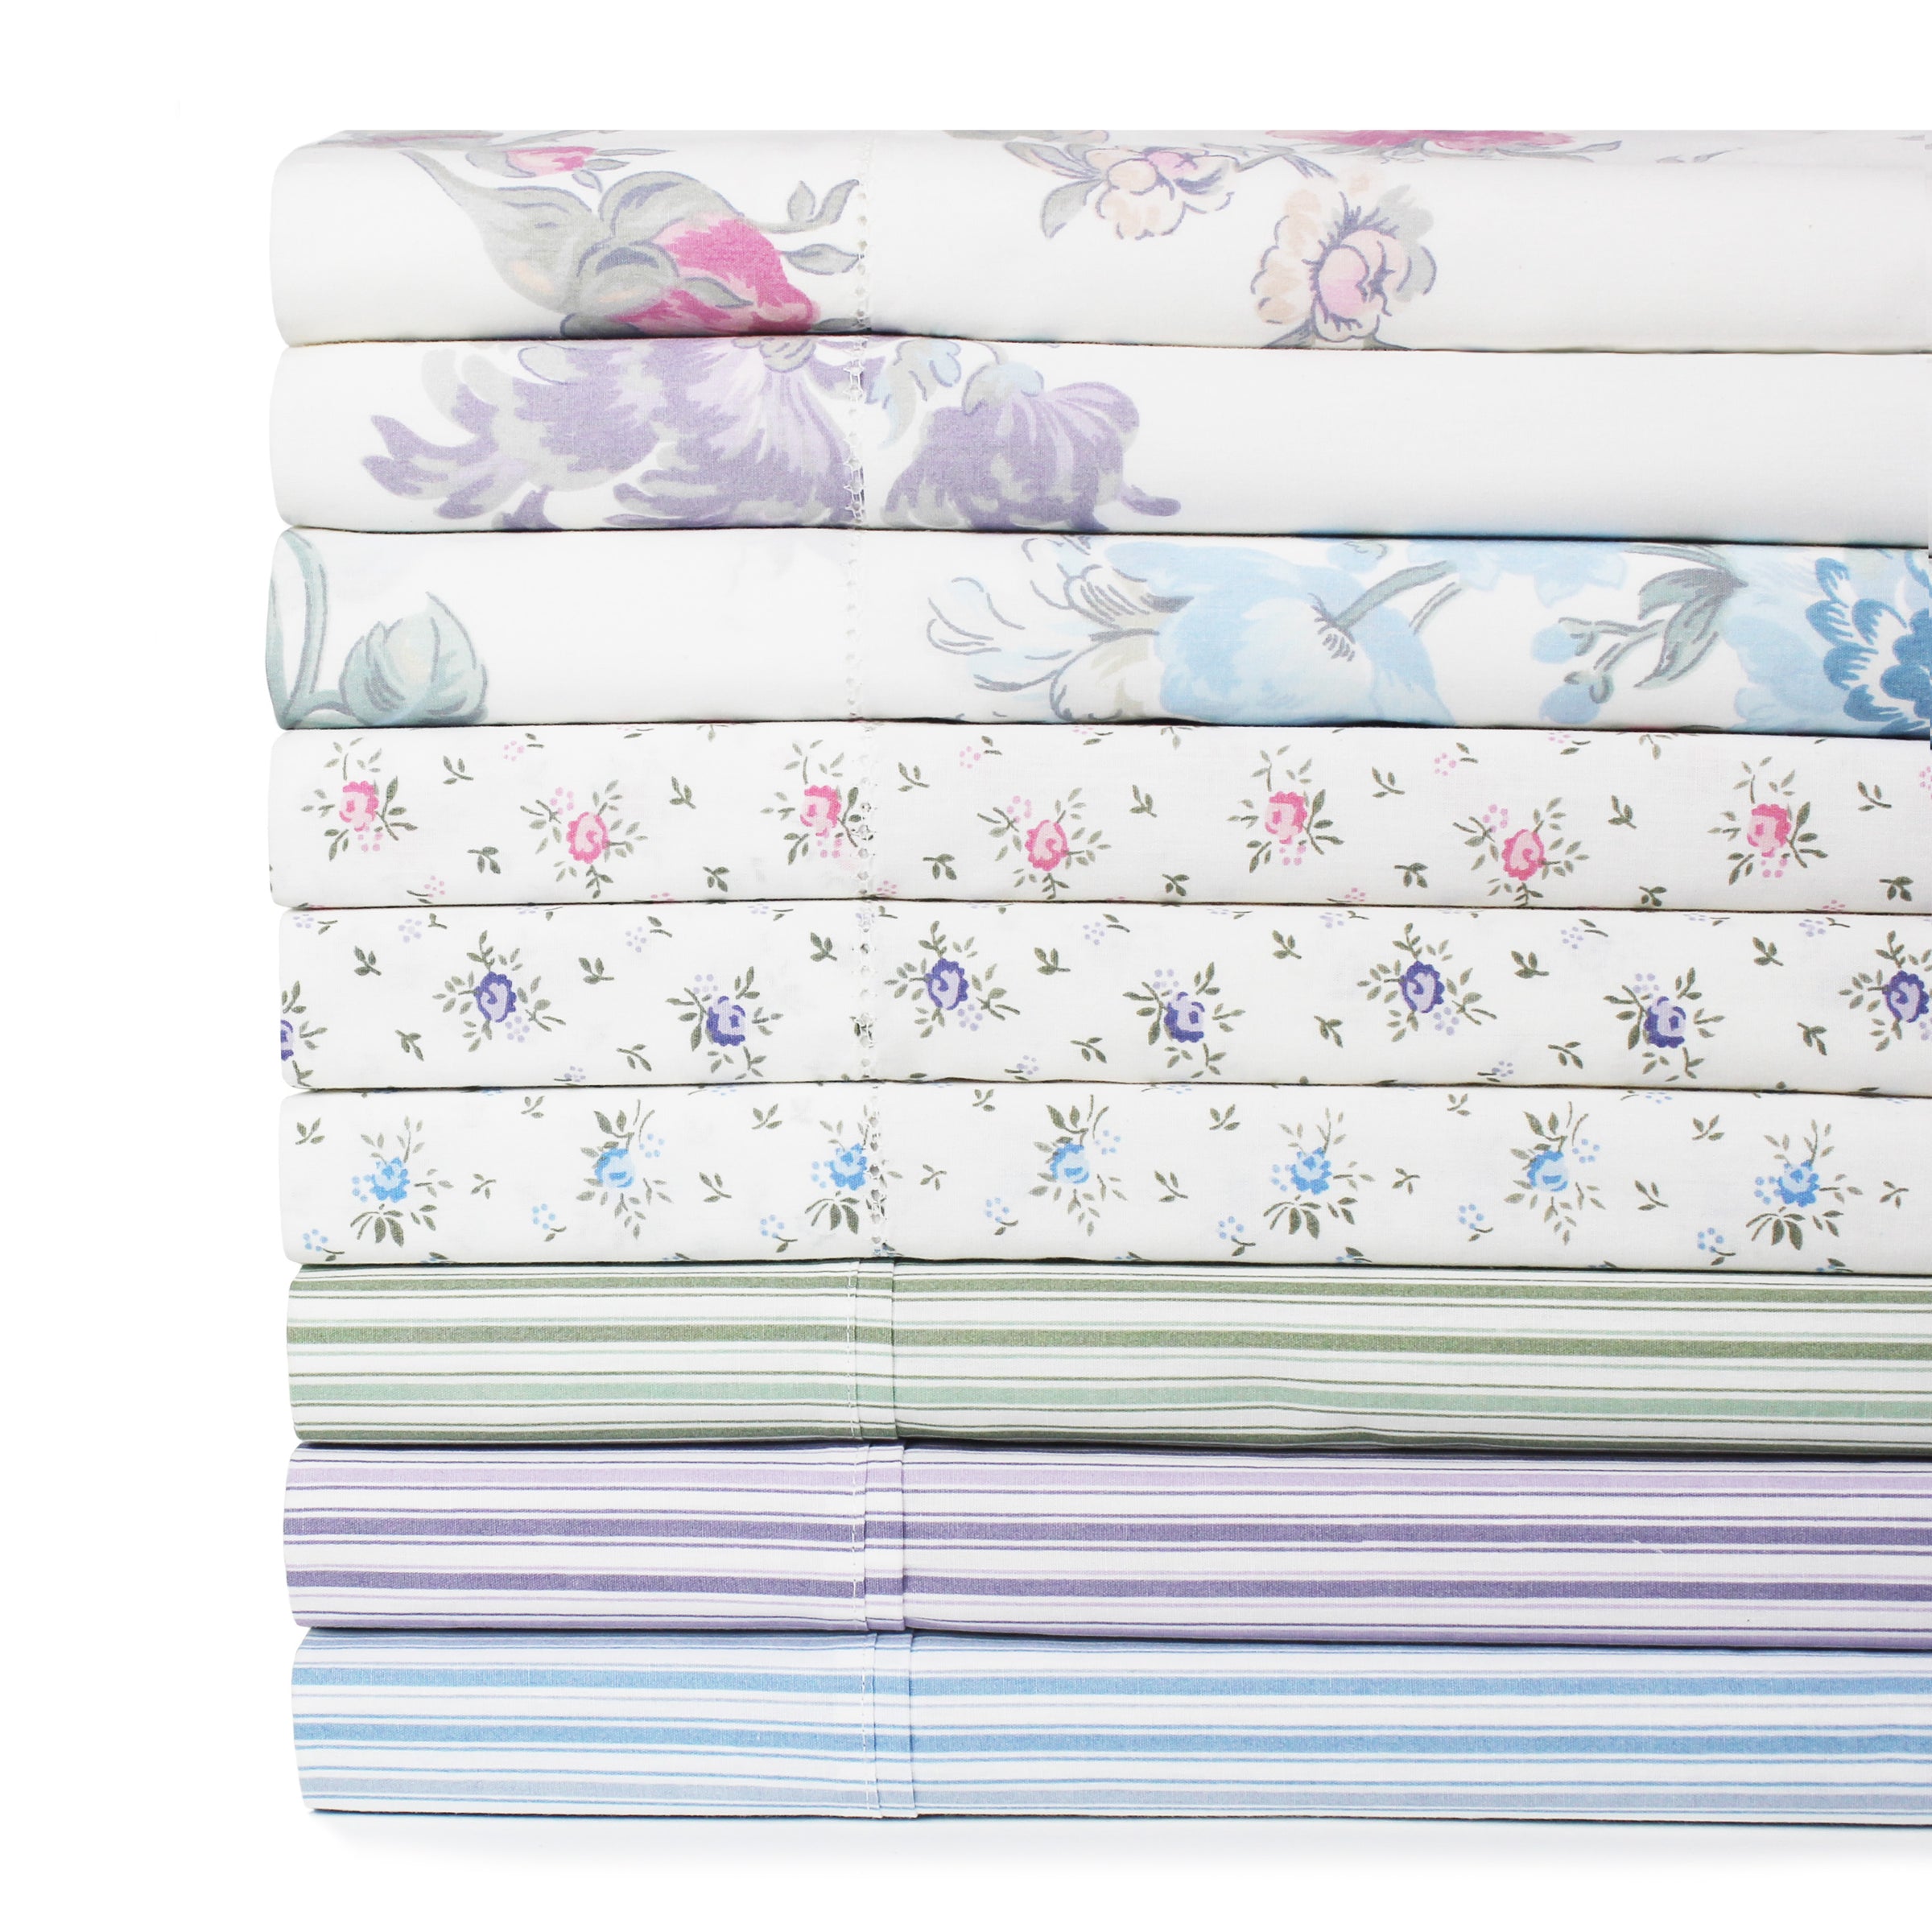 La Fleur Printed Cotton Percale Pillowcases